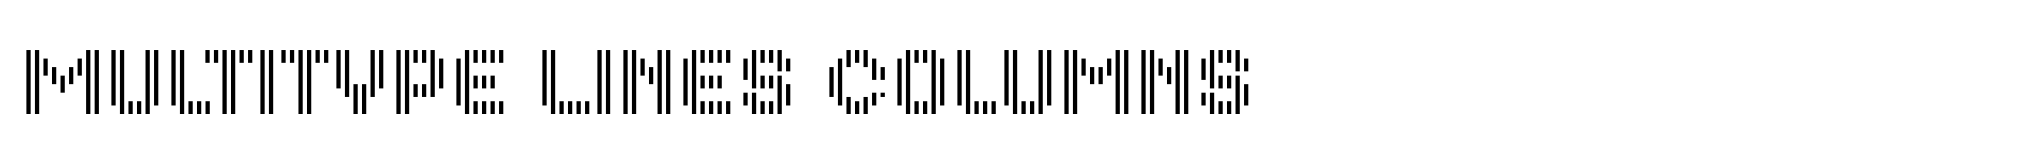 MultiType Lines Columns image